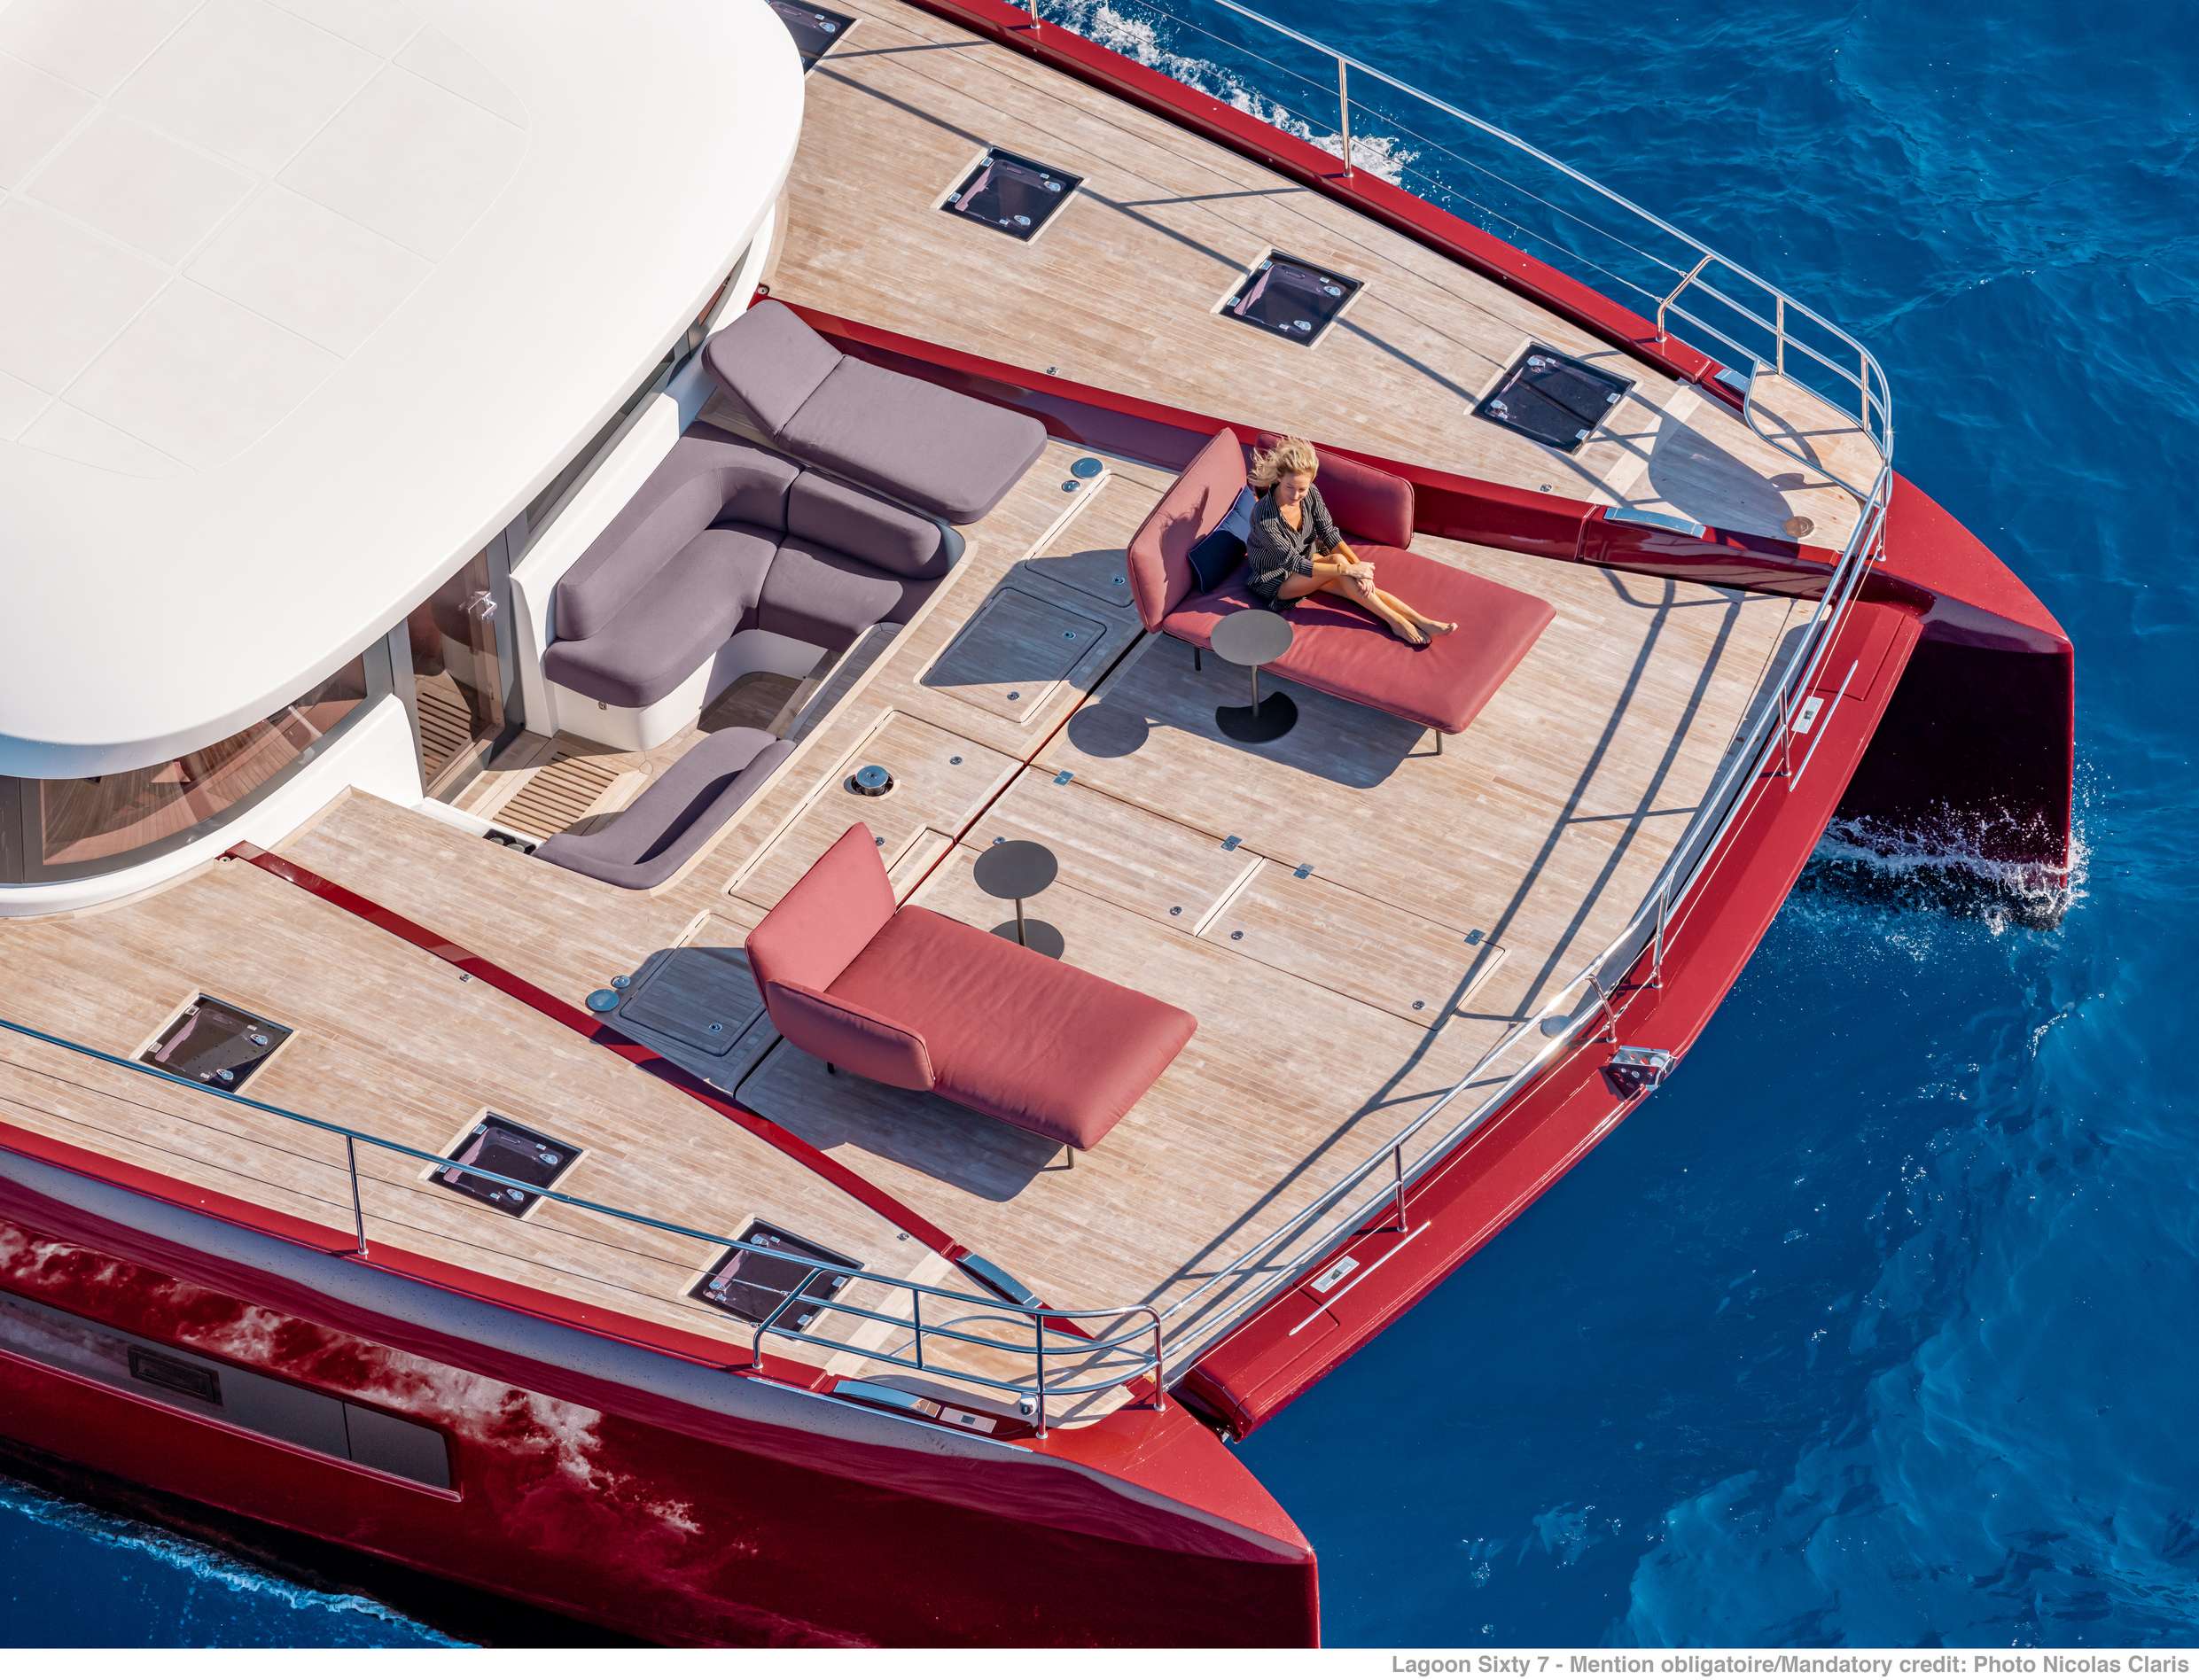 VALIUM 67 - Motorboat rental worldwide & Boat hire in Greece 6